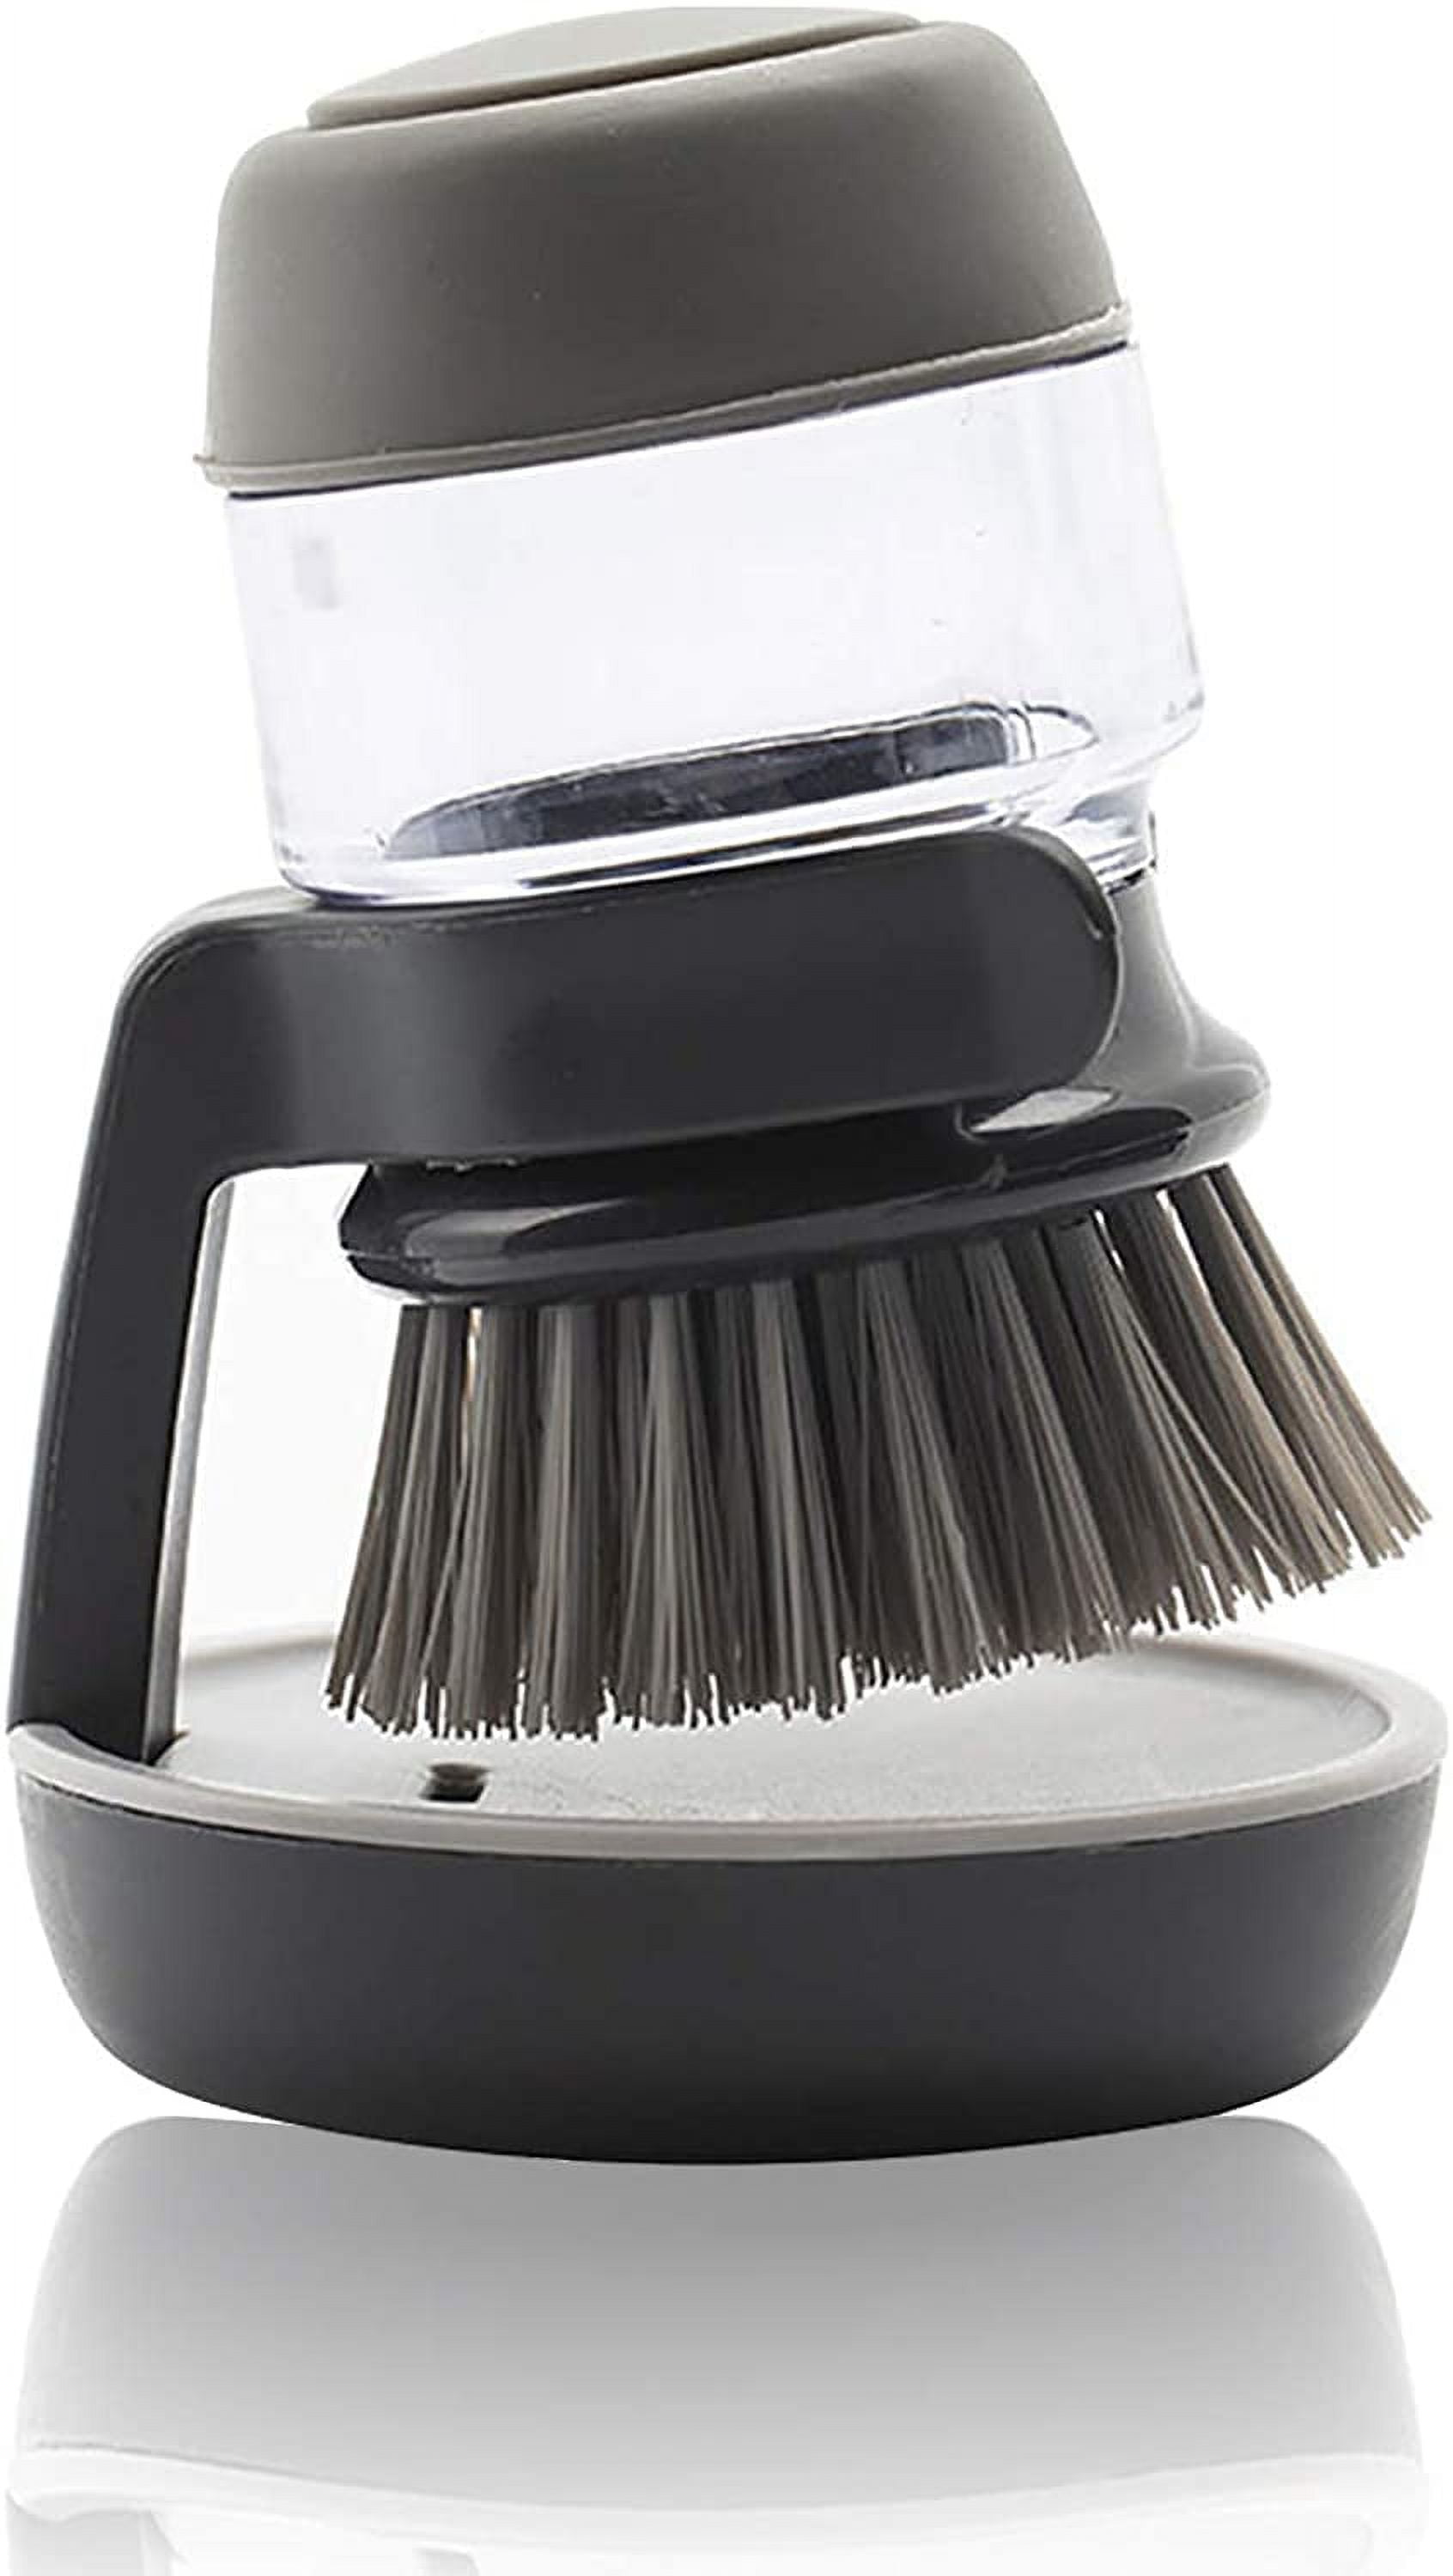 Soap Dispensing Dish Brush Soap Dispensing Palm Brush Dishwashing Removable  Scrub Brushes Dish Scrubber with Holder Kitchen Tool